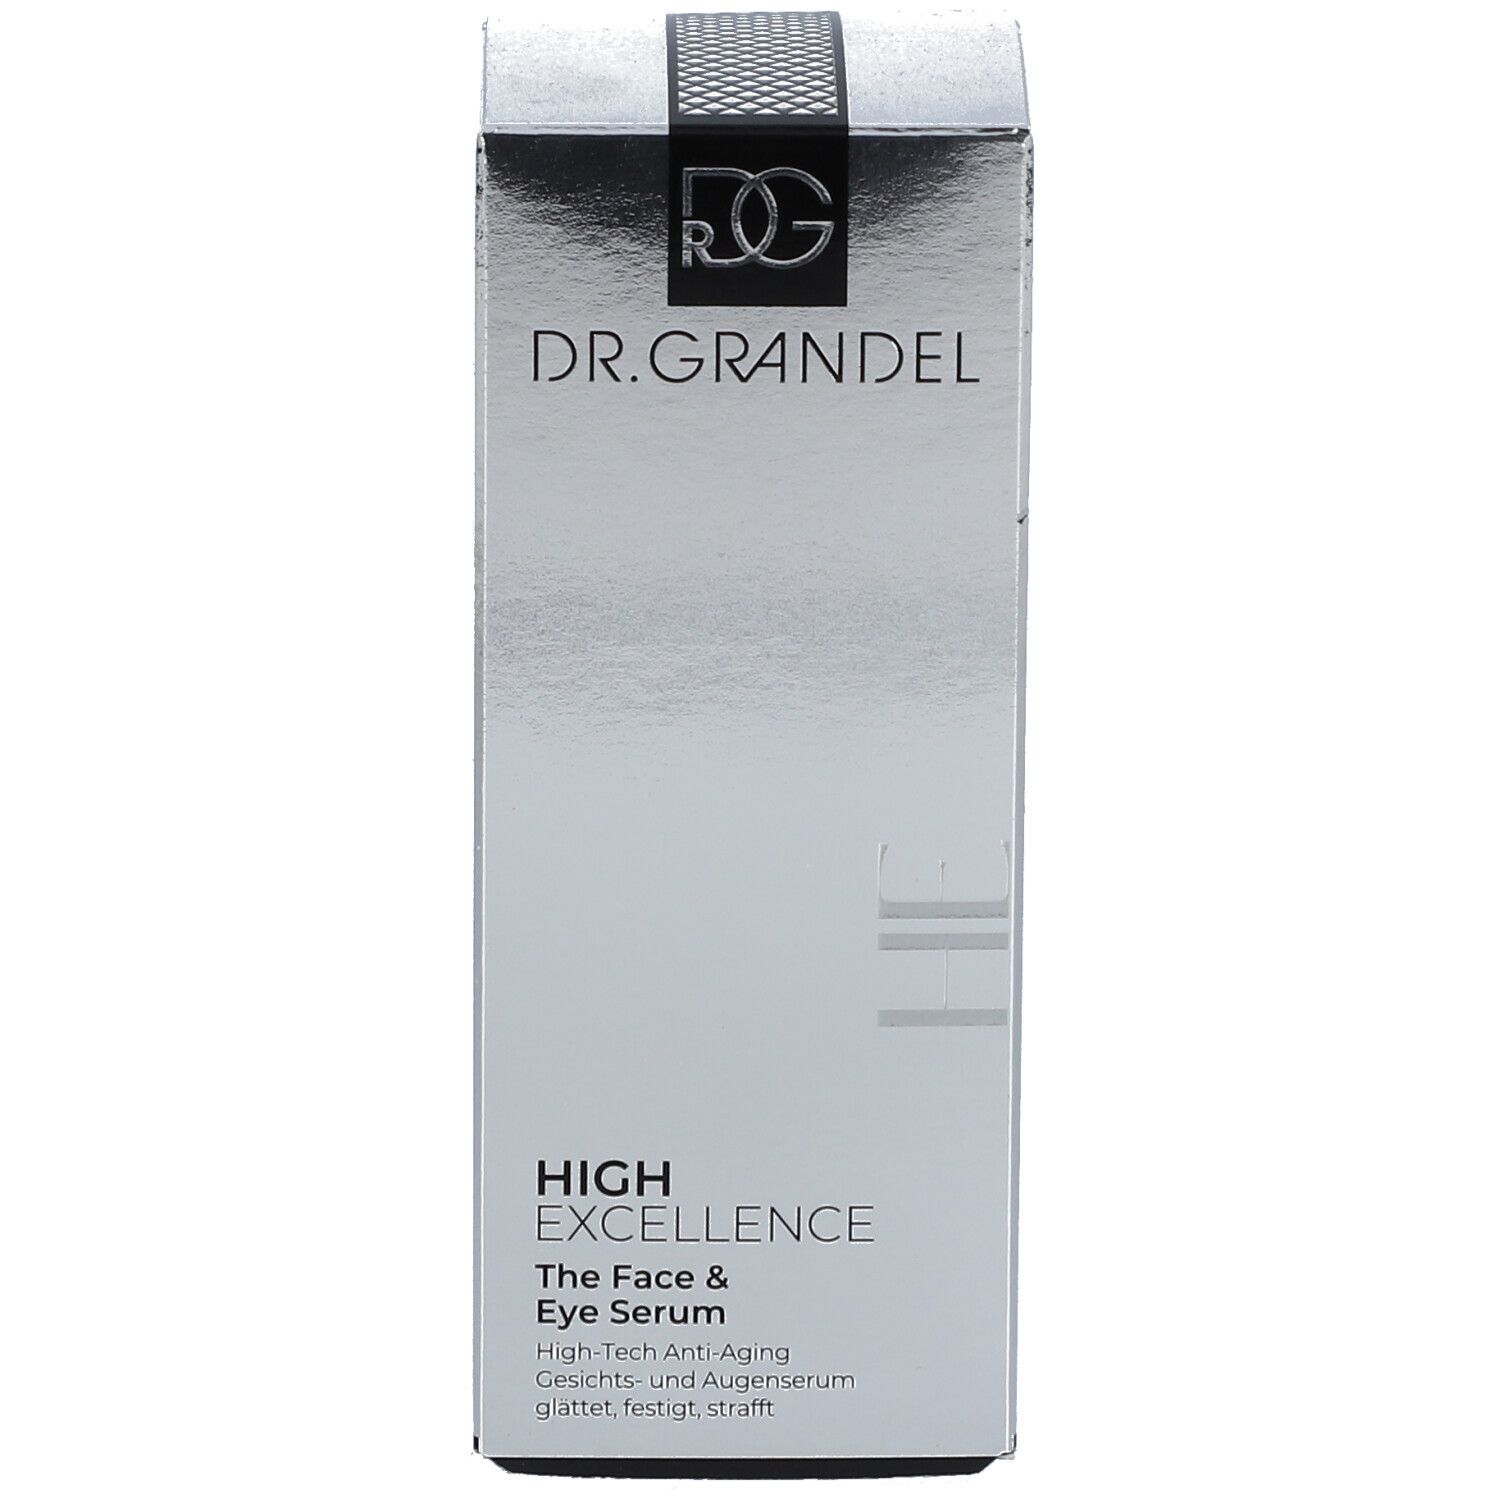 Dr. Grandel High Excellence The Face & Eye Serum